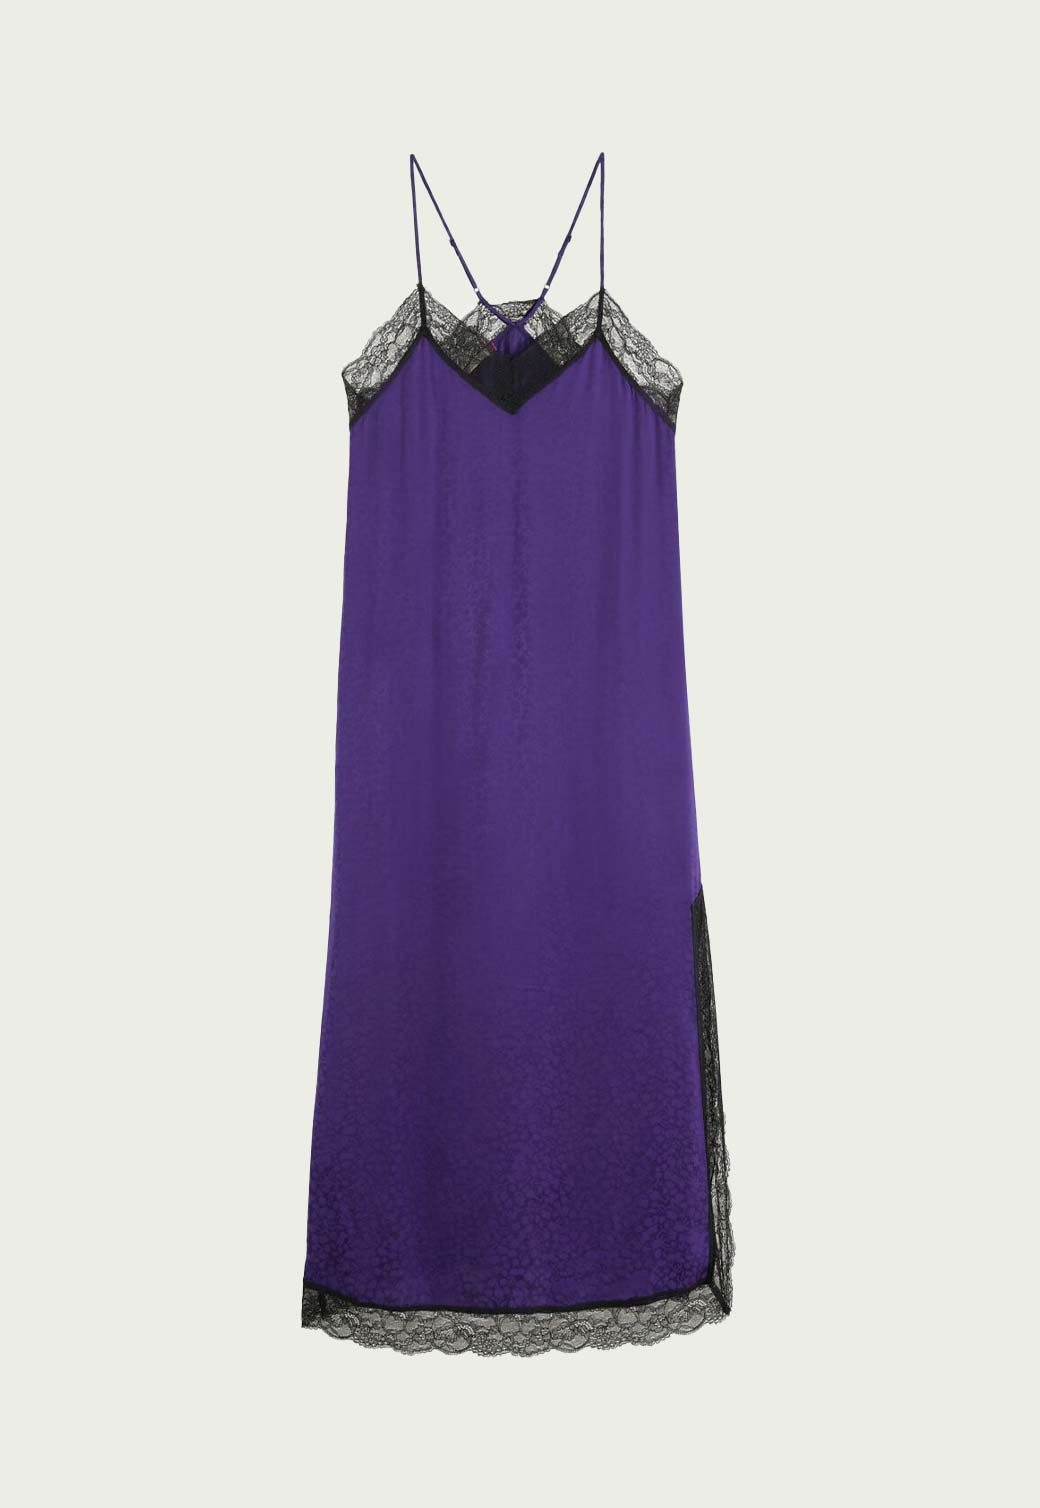 Dark Slate Blue שמלת מקסי לנשים Cami SCOTCH & SODA